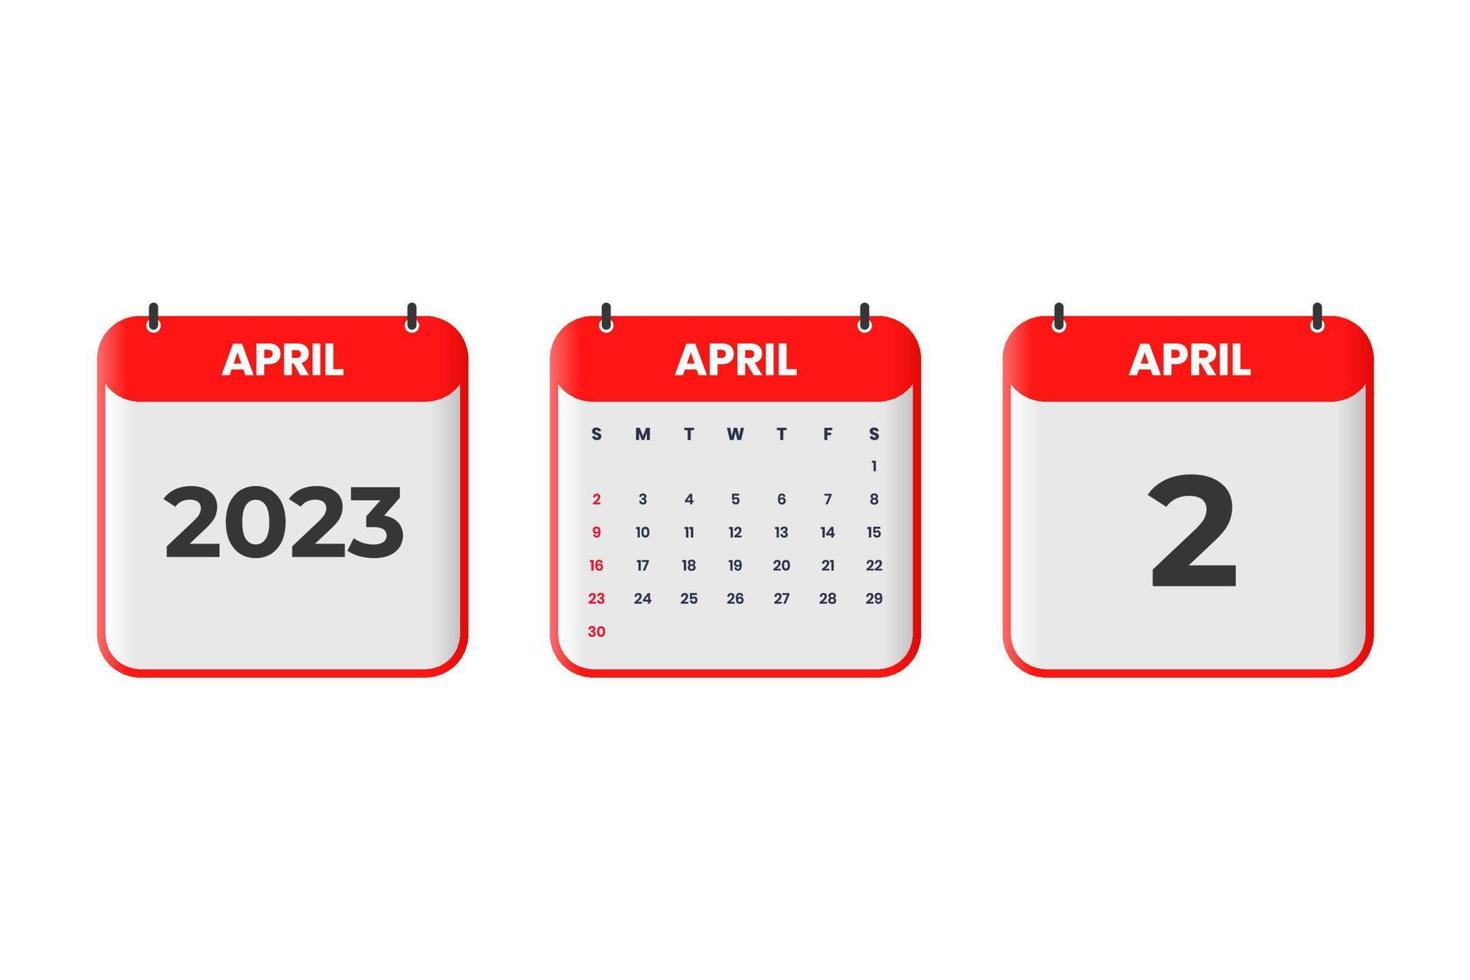 April 2023 Kalenderdesign. 2. april 2023 kalendersymbol für zeitplan, termin, wichtiges datumskonzept vektor